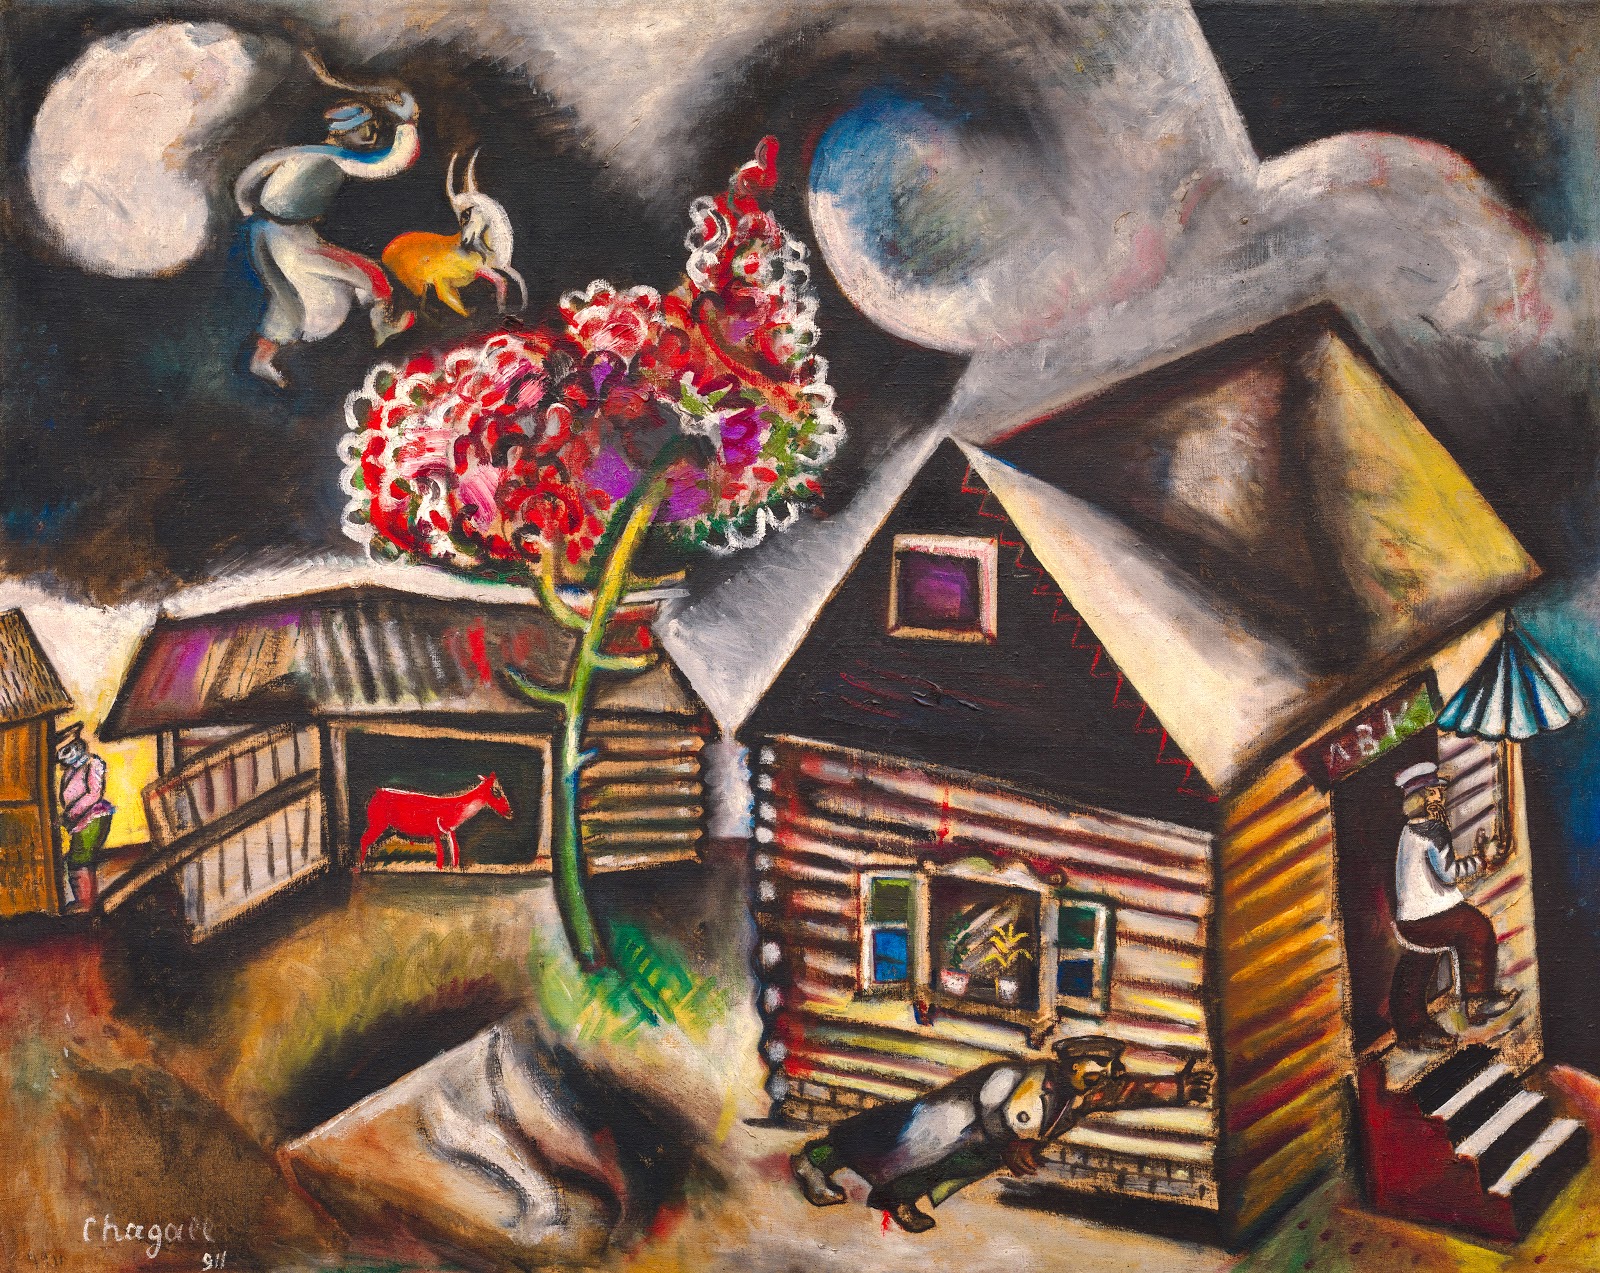 Marc+Chagall-1887-1985 (285).jpg